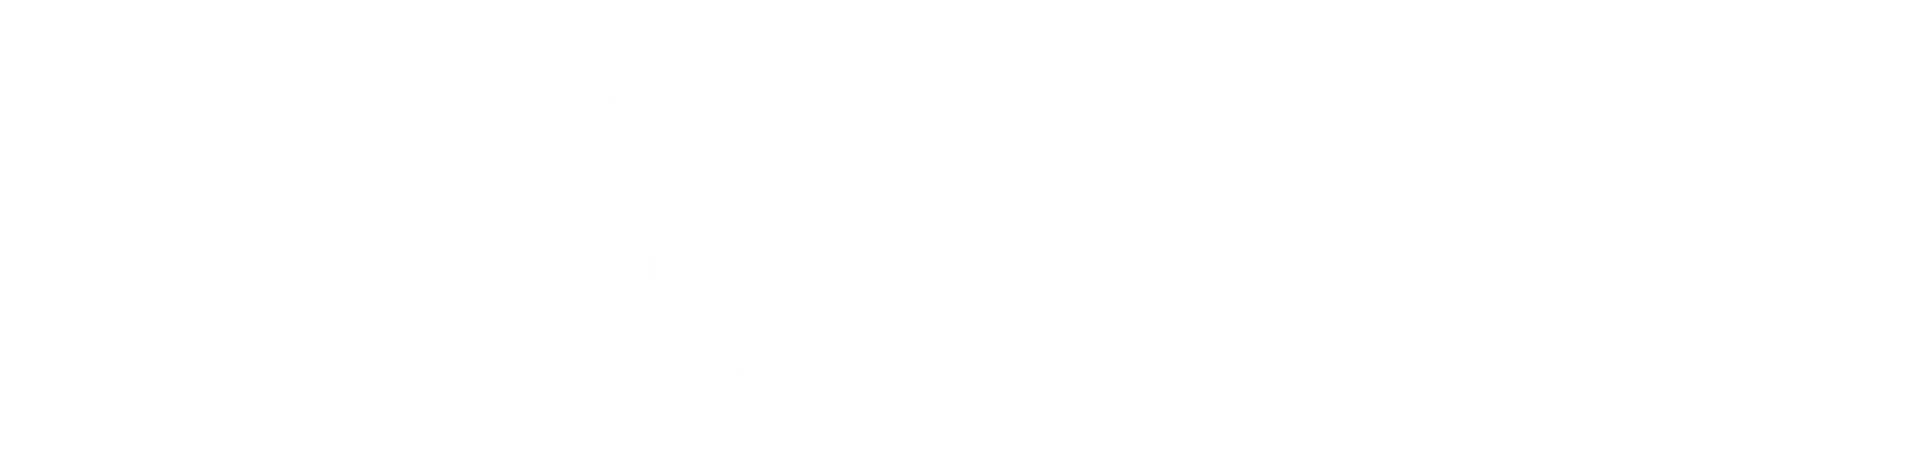 Junior's House, Inc